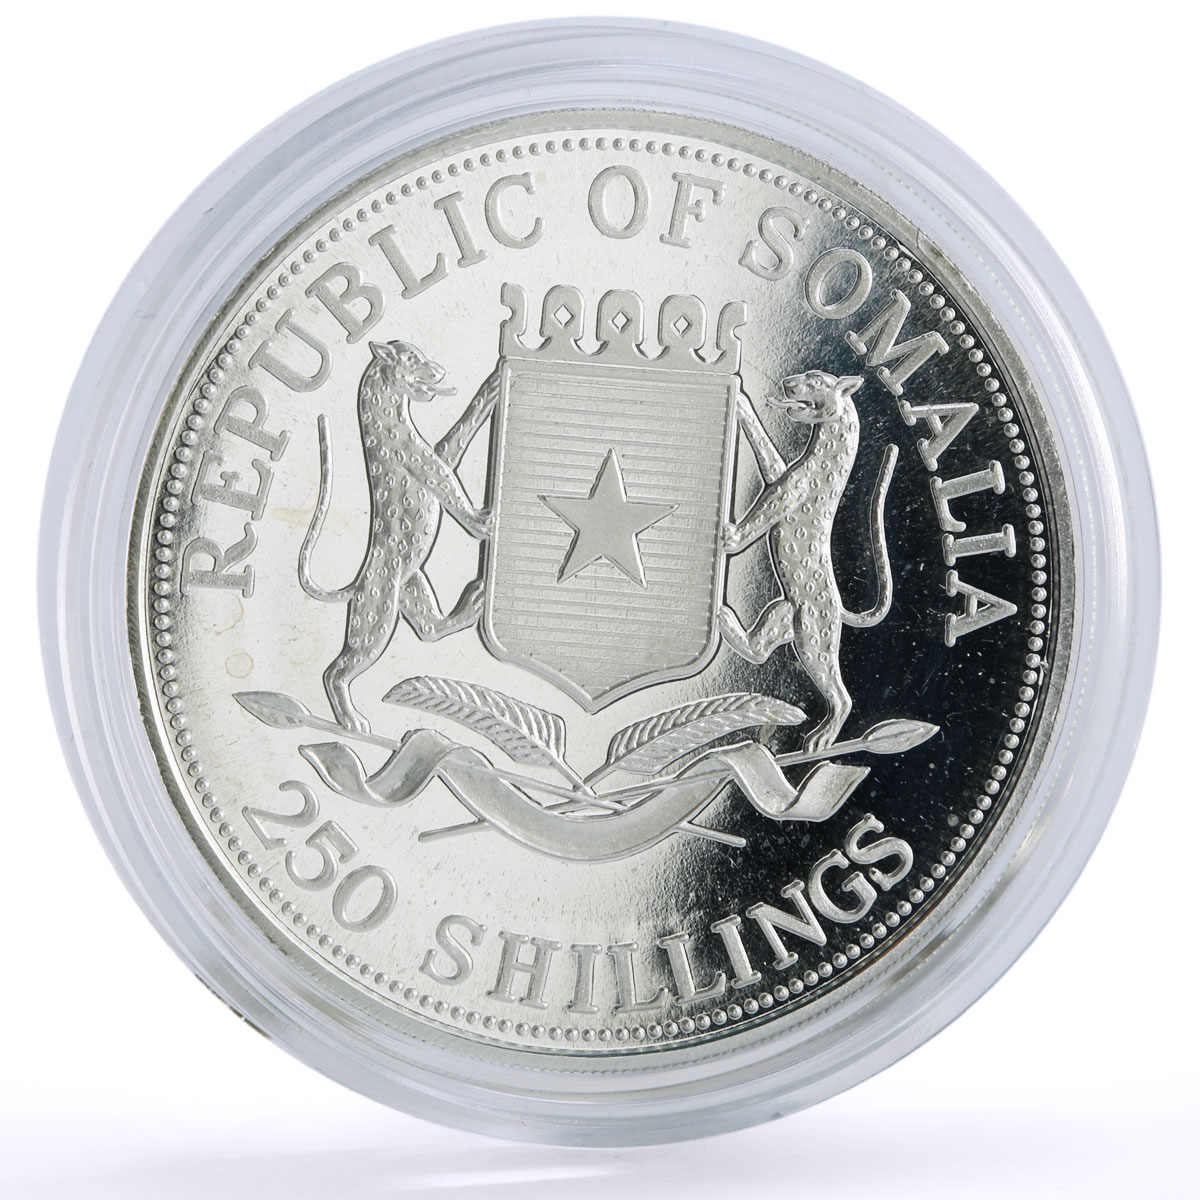 Somalia 250 shillings Conservation Wildlife Spurfowl Bird Fauna silver coin 1998